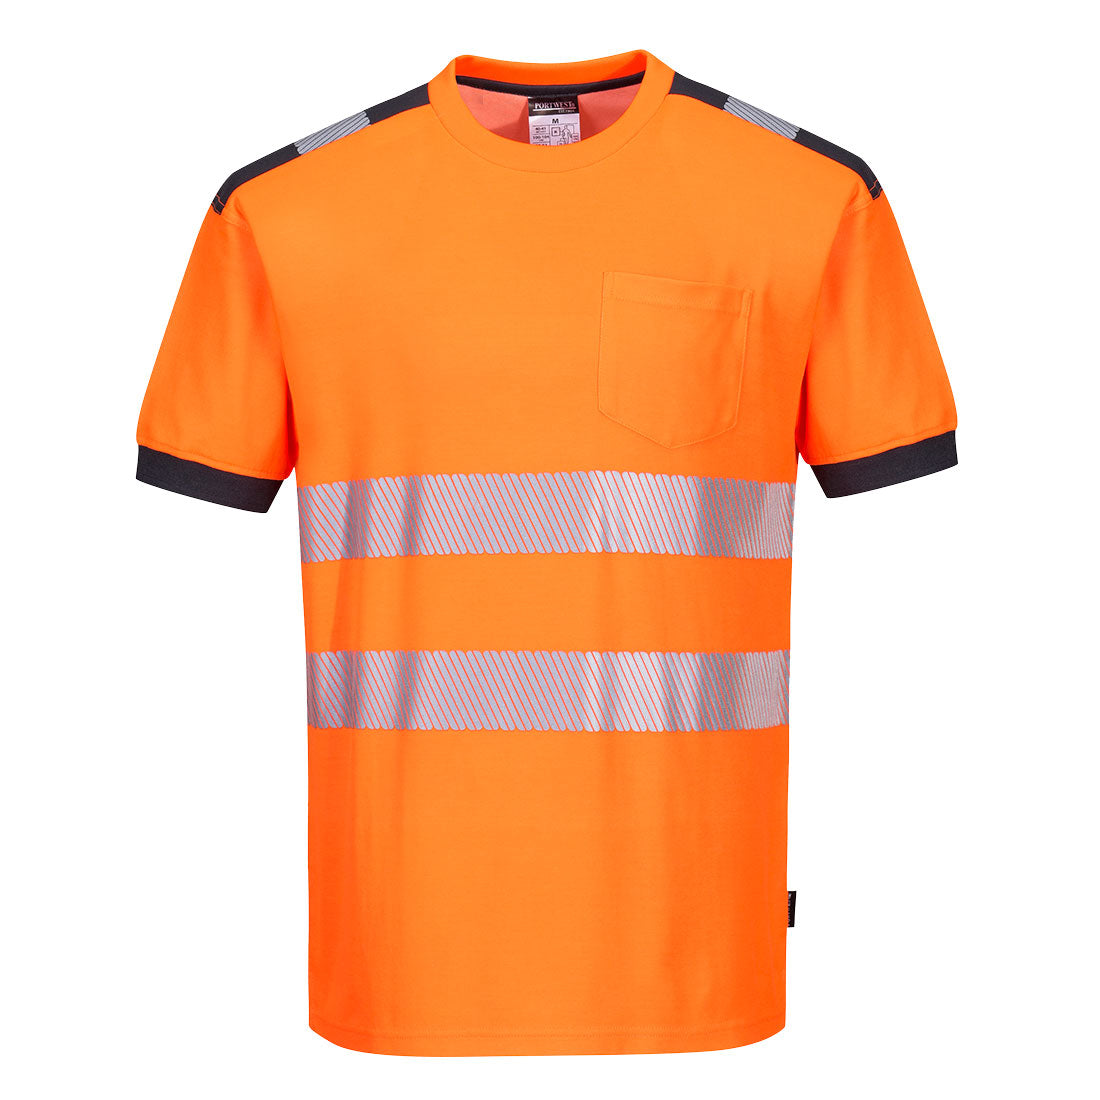 Portwest T181 - Orange/Grey Sz S PW3 Hi-Vis Short Sleeved T-Shirt Viz Visibilty